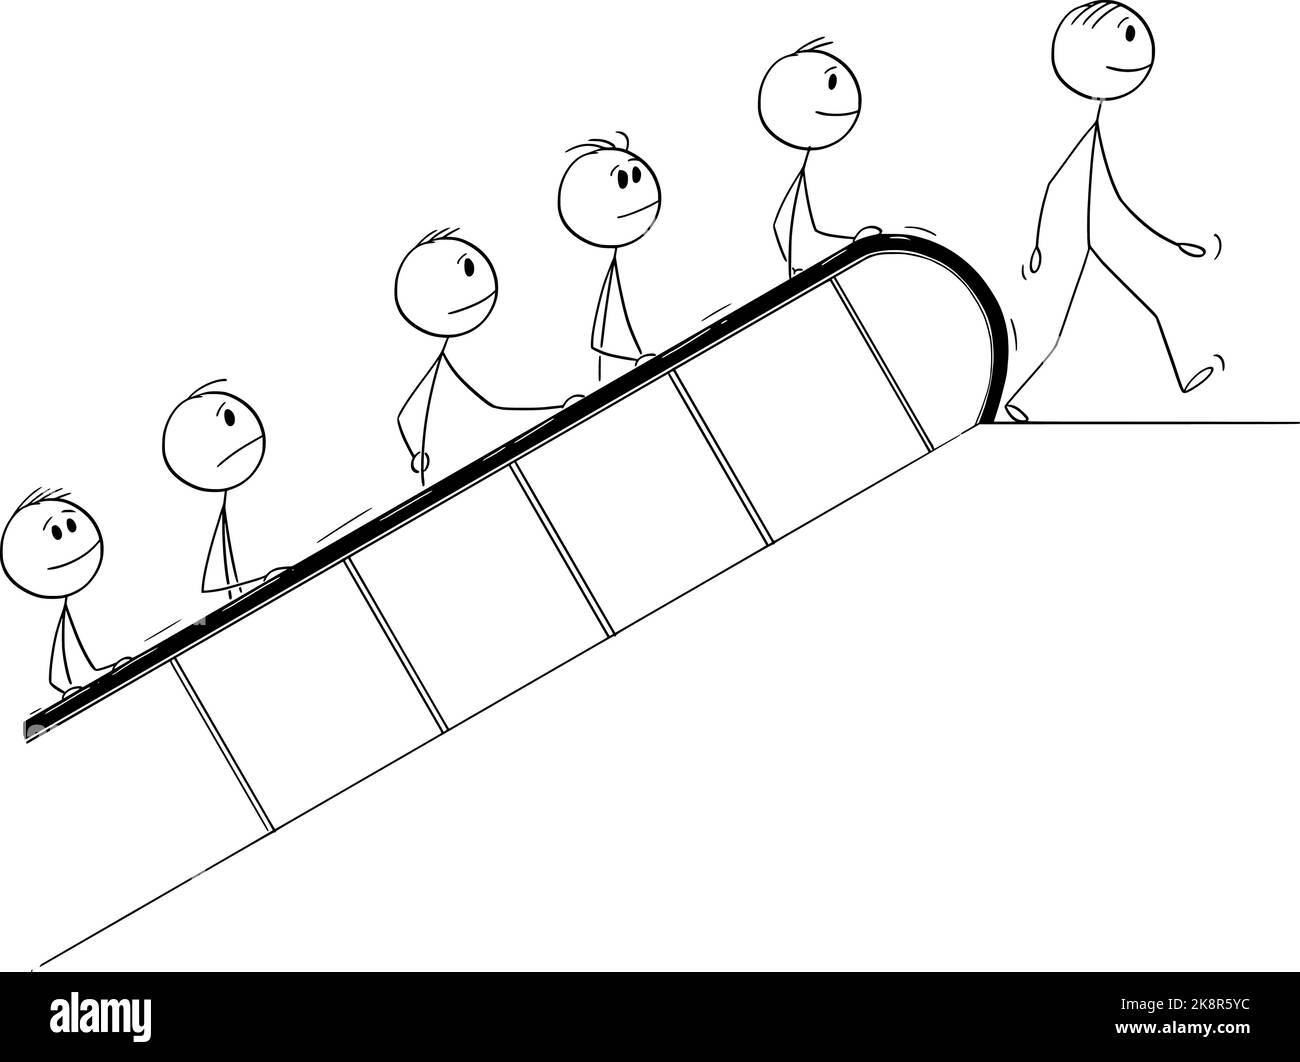 People on Escalator, Vector Cartoon Stick Figure Illustration Stock Vector